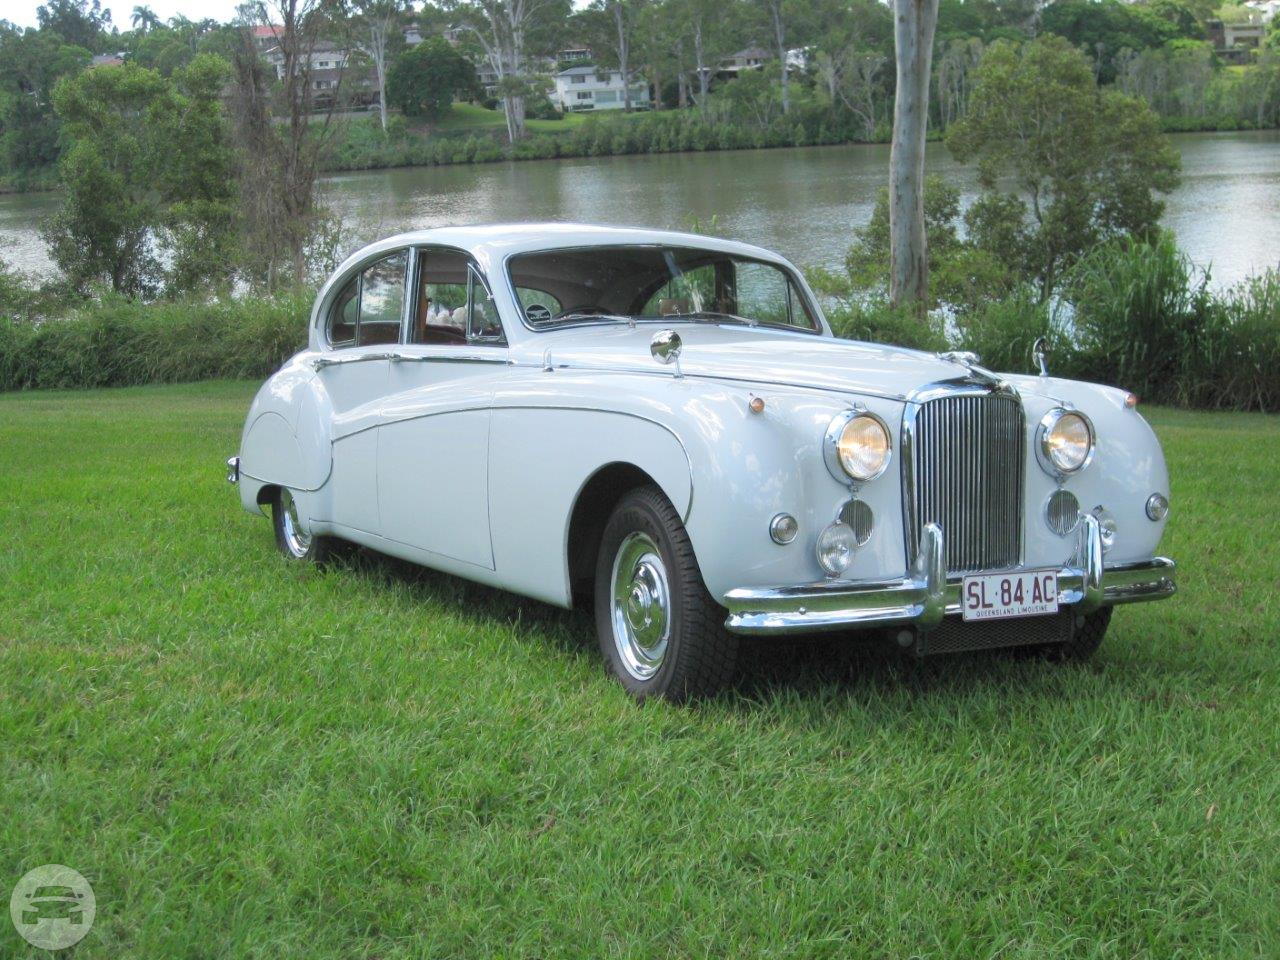 Jaguar Mark IX 1960 ( Black & White)
Sedan /
Brisbane City, QLD

 / Hourly AUD$ 0.00
